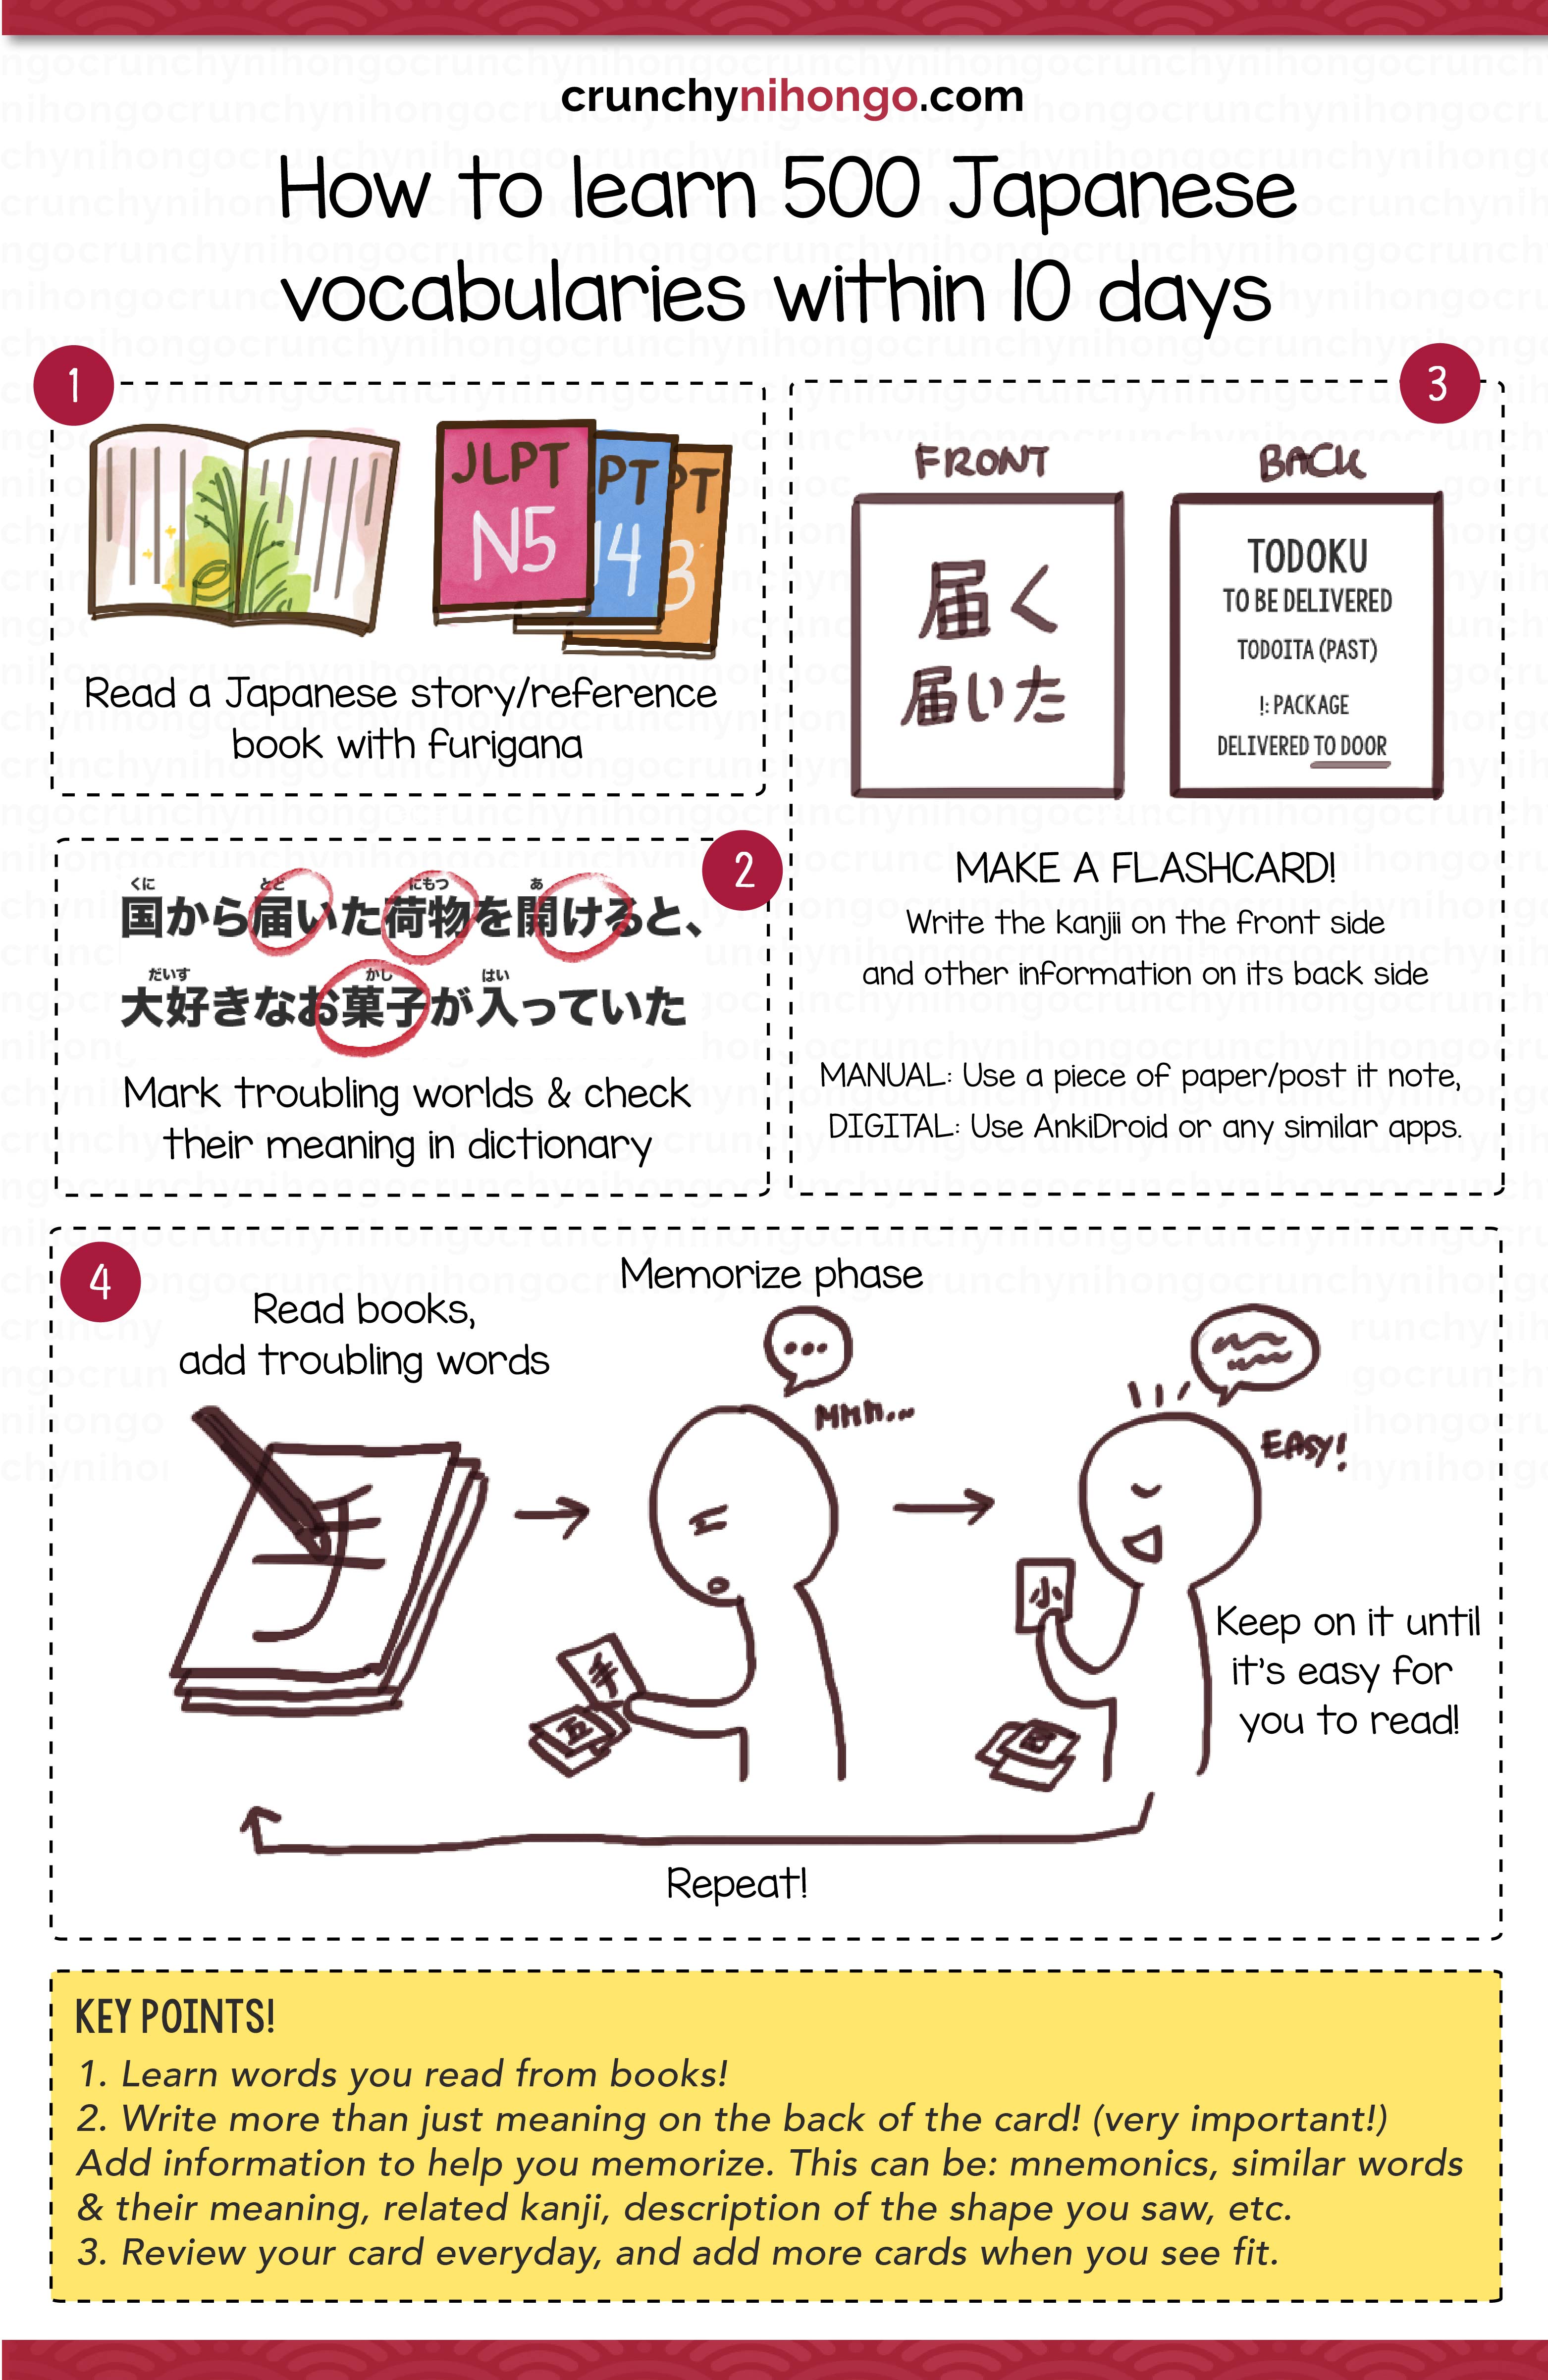 memorize-kanji-with-flashcard